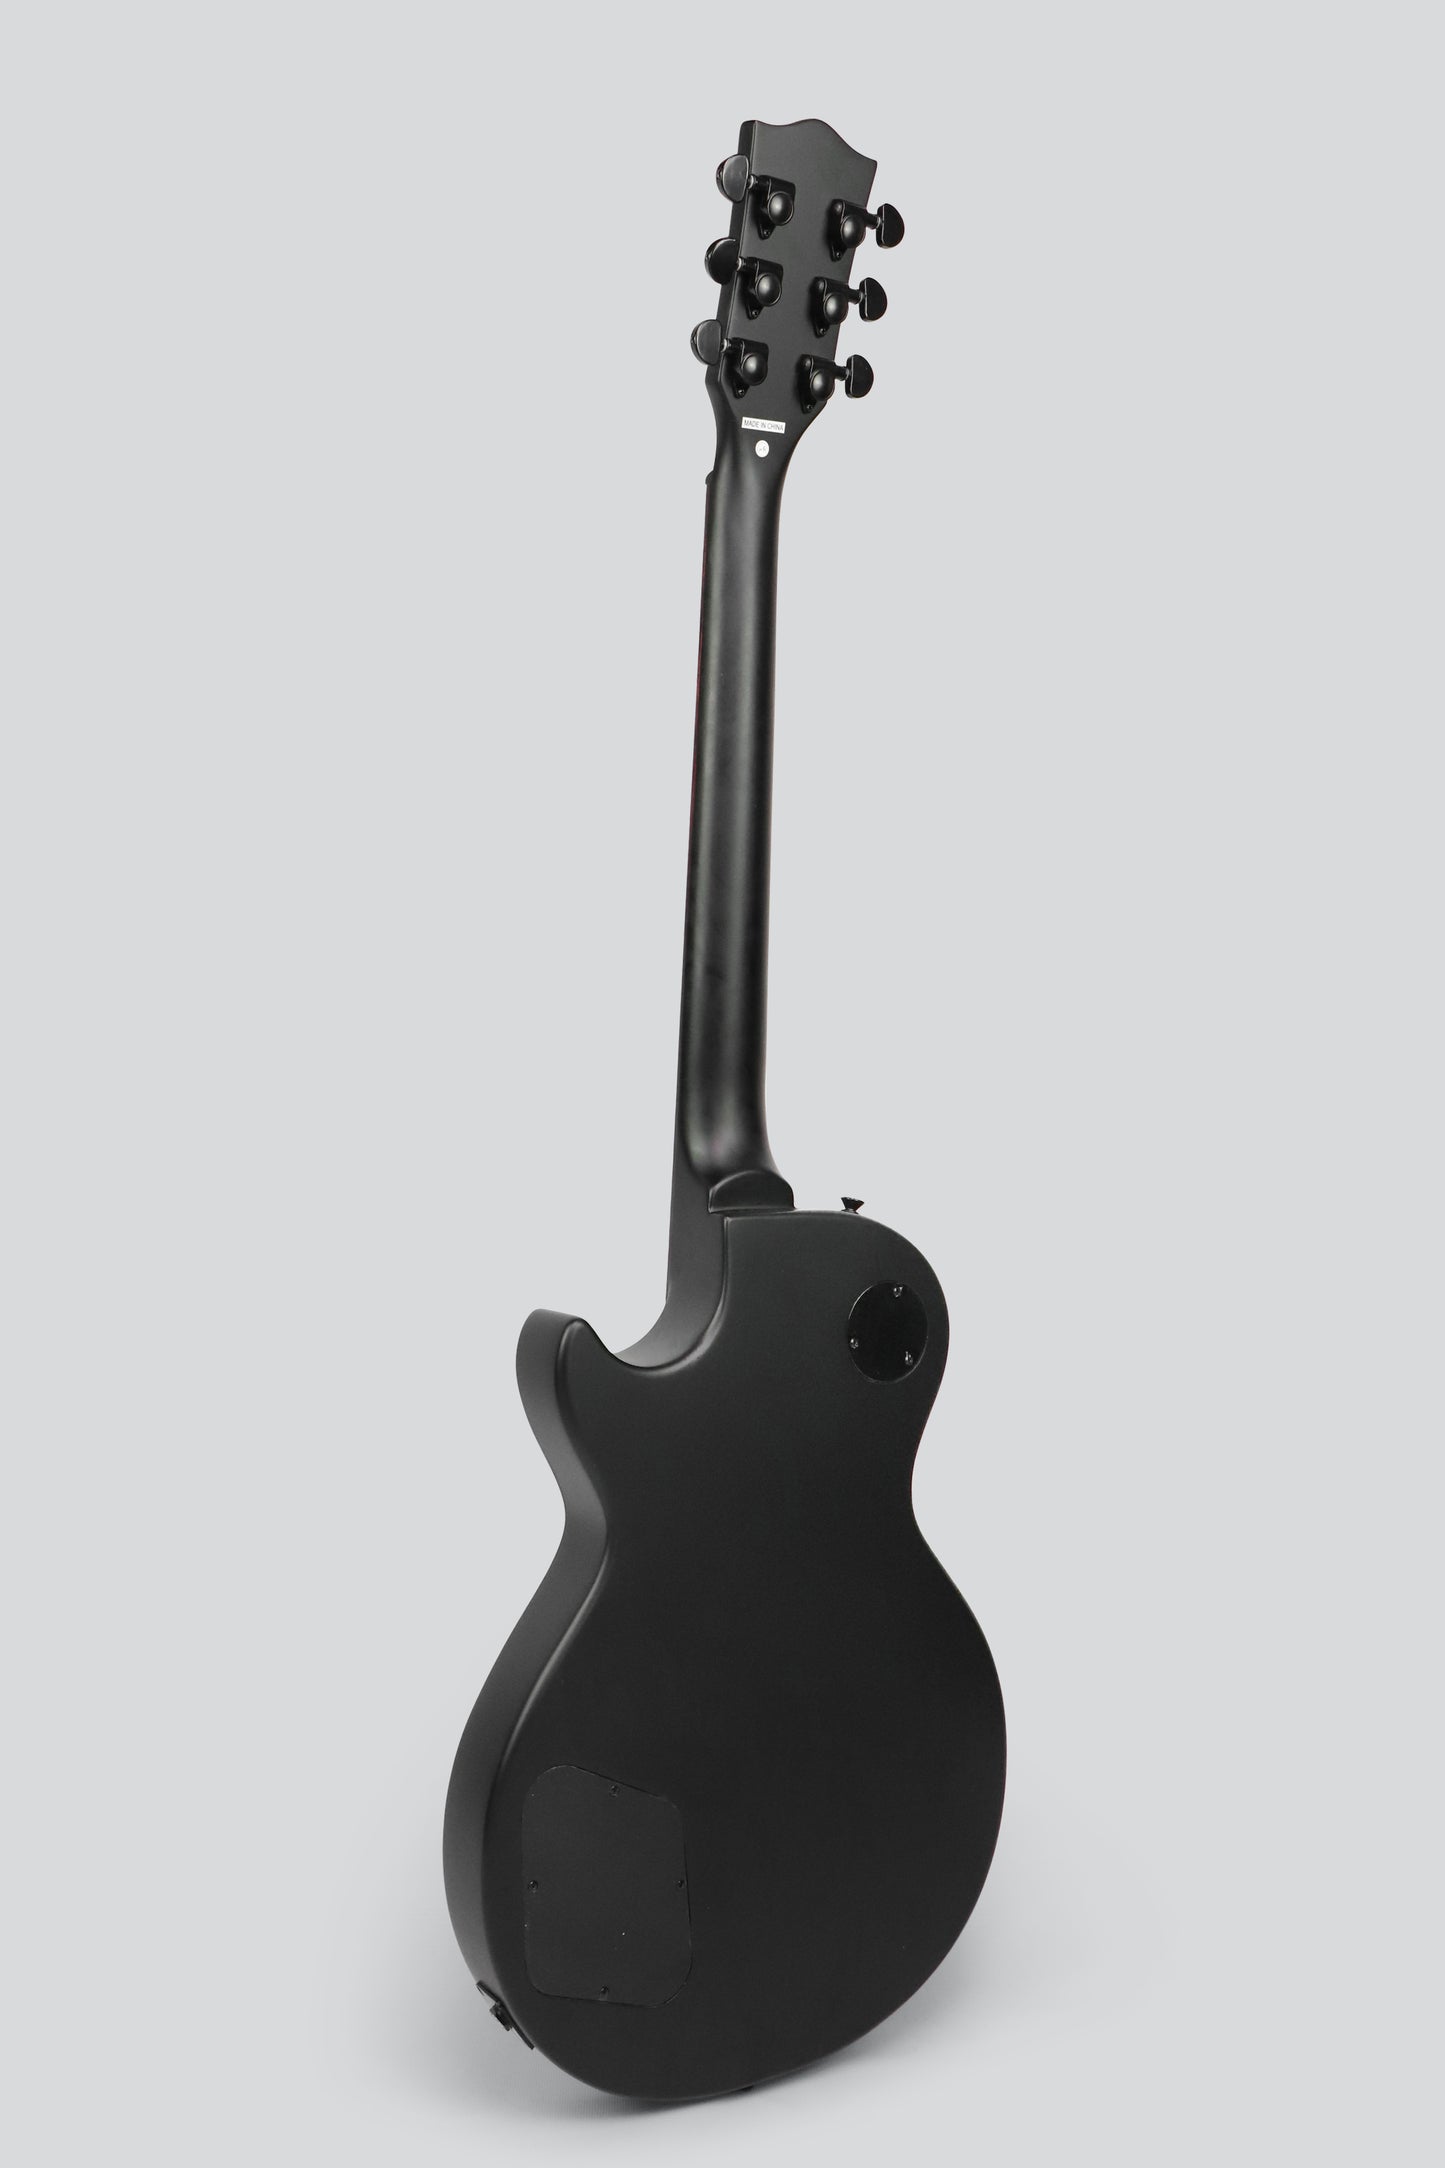 JCraft X LPX-2 Single Cut Mahogany Body Archtop Electric Guitar - Shadow